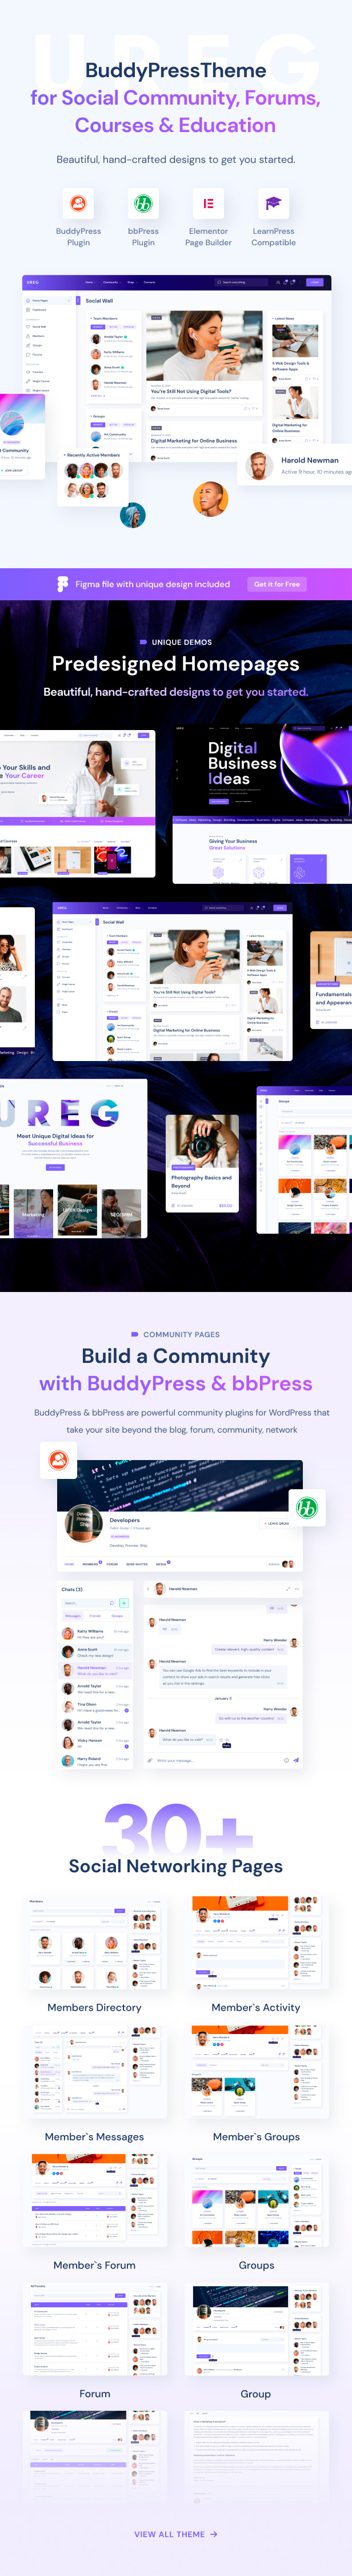 Ureg - BuddyPress & Community WordPress Theme - 1